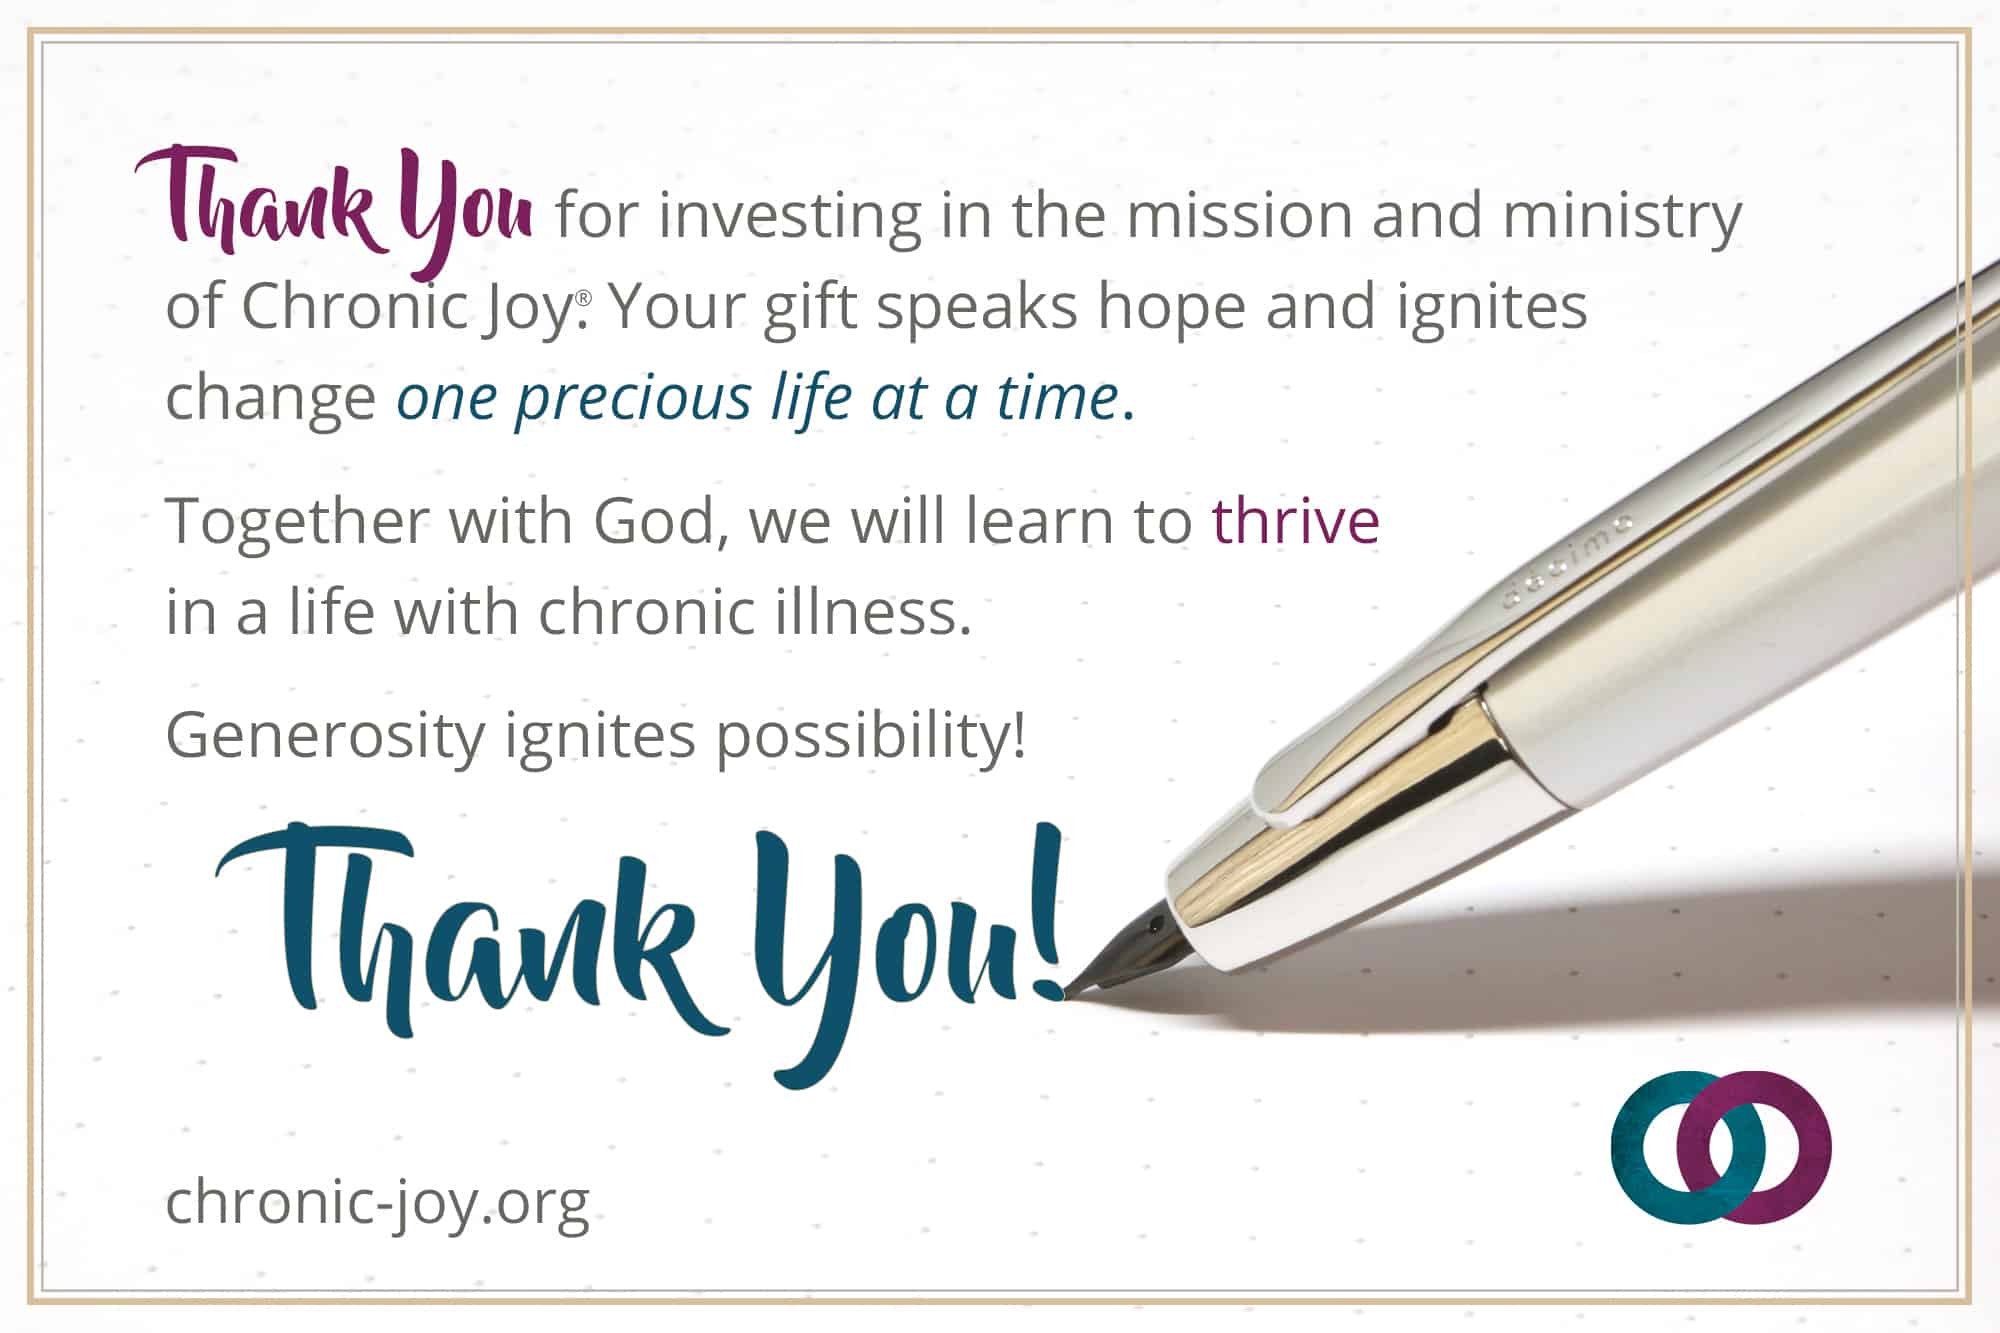 Thank you for investing in Chronic Joy® Generosity ignites possibility!